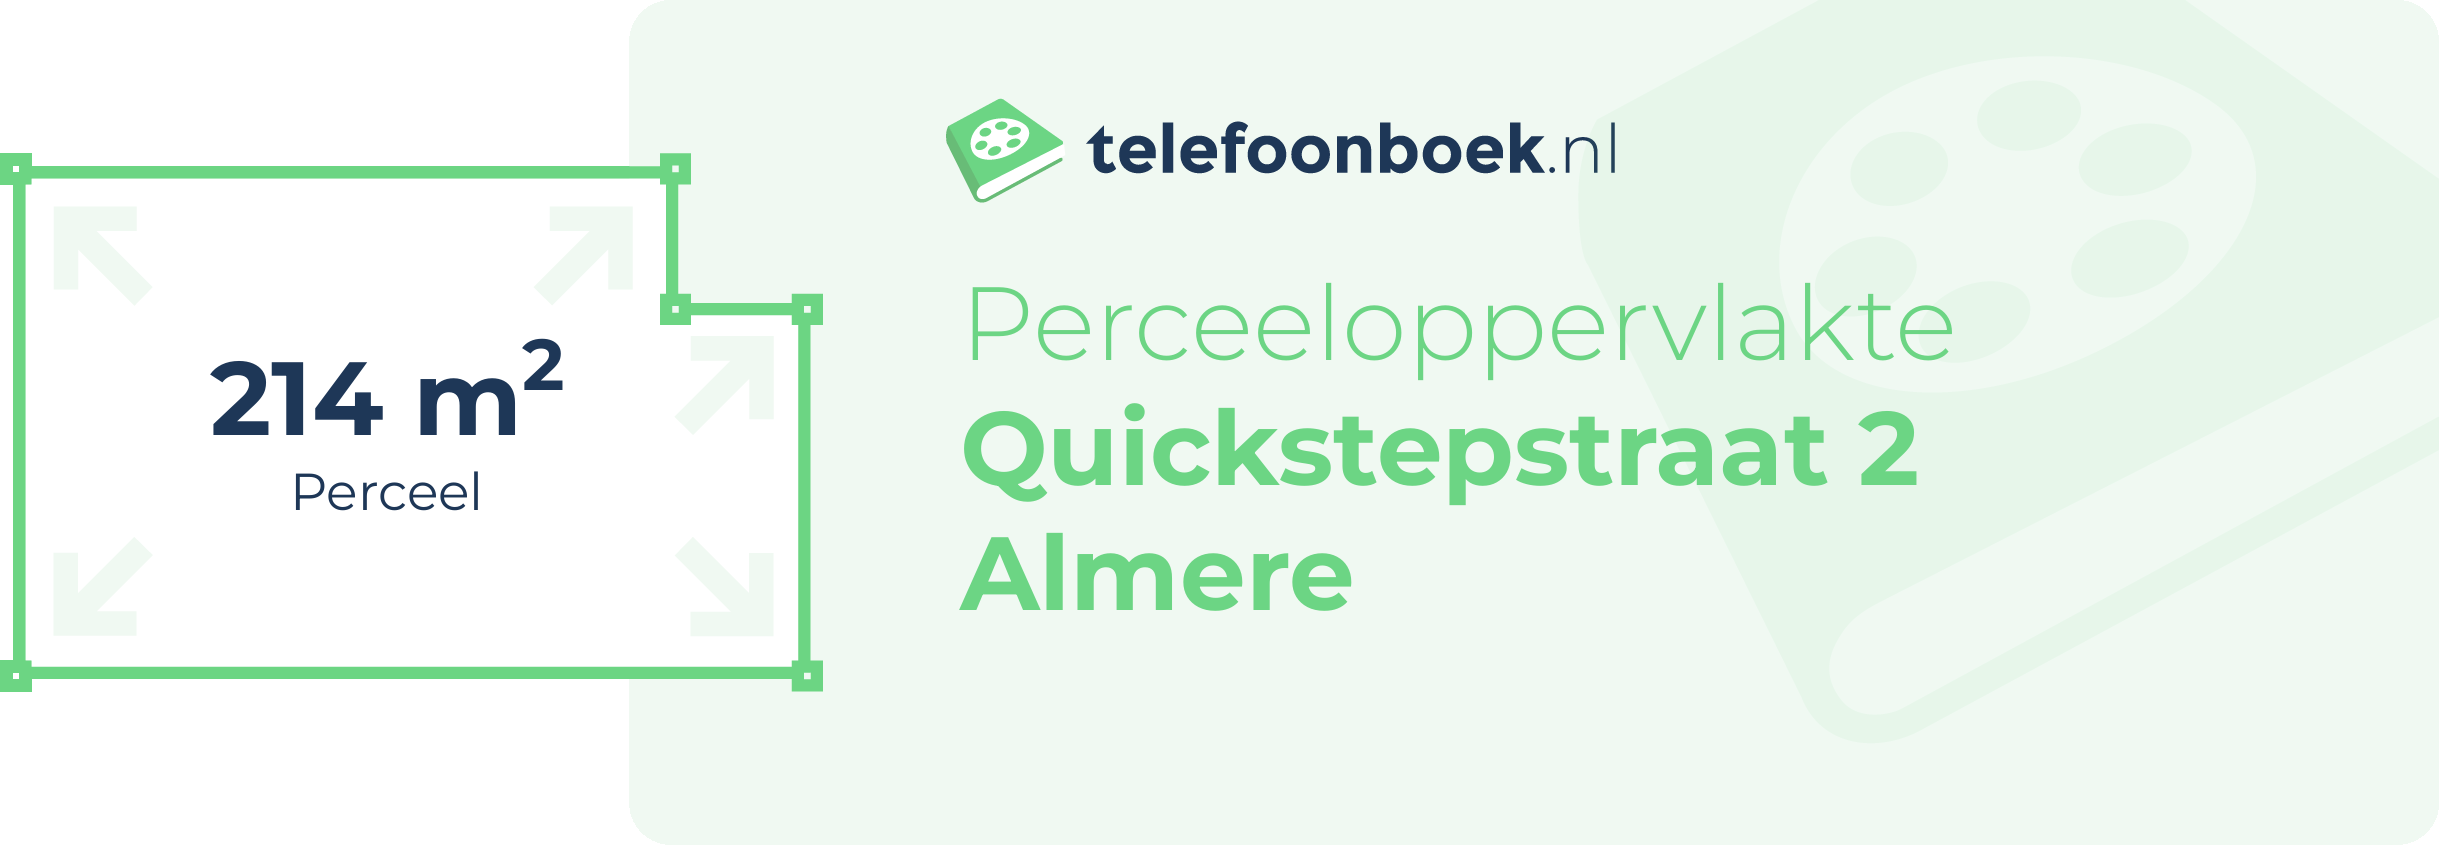 Perceeloppervlakte Quickstepstraat 2 Almere